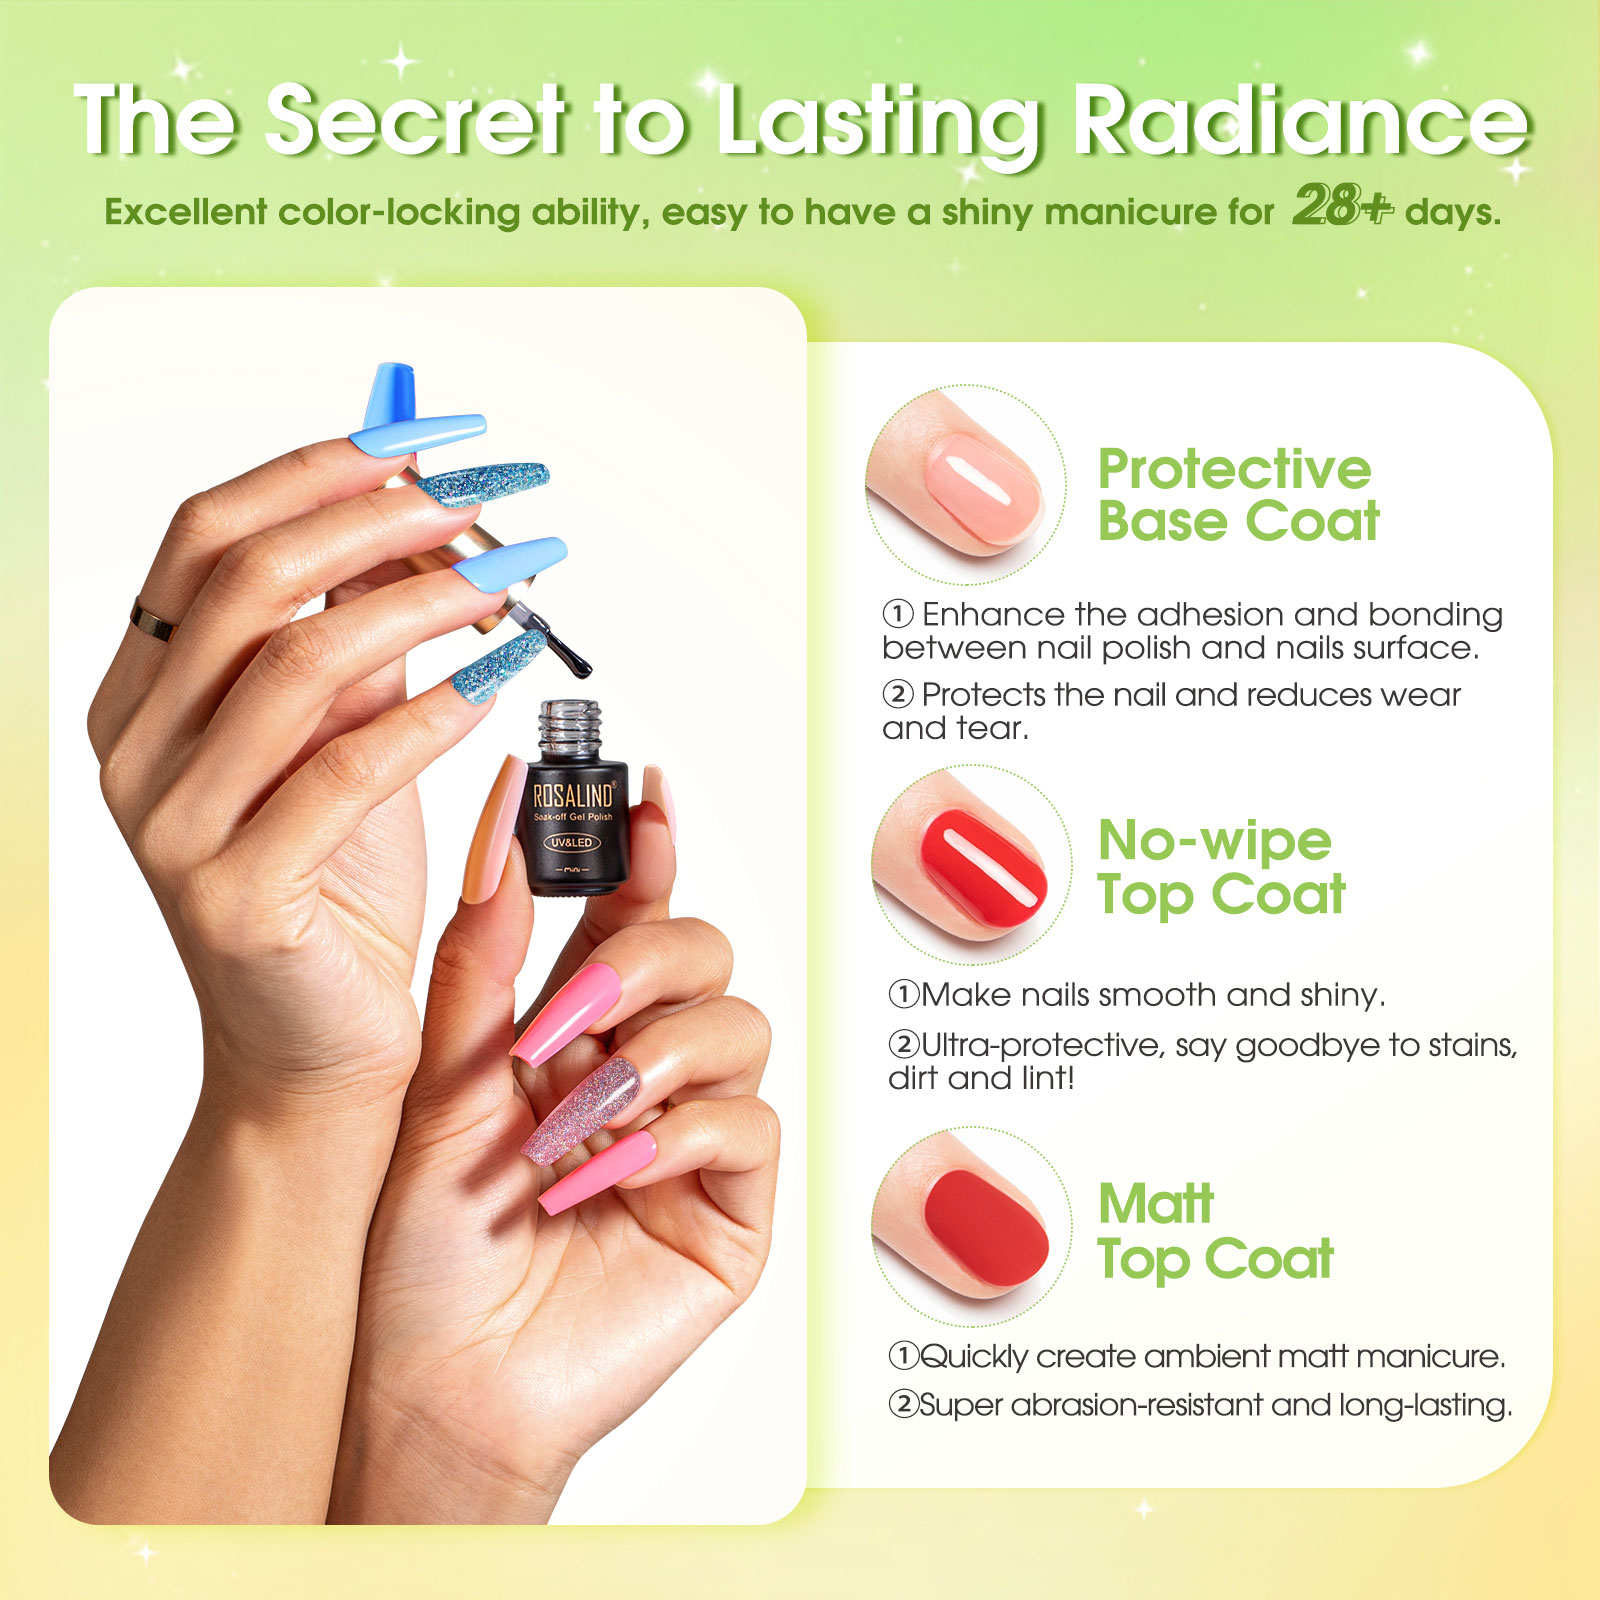 ROSALIND cross-border new nail polish gel 23 bottles color gel manicure set gel nude nail polish nail salon exclusive